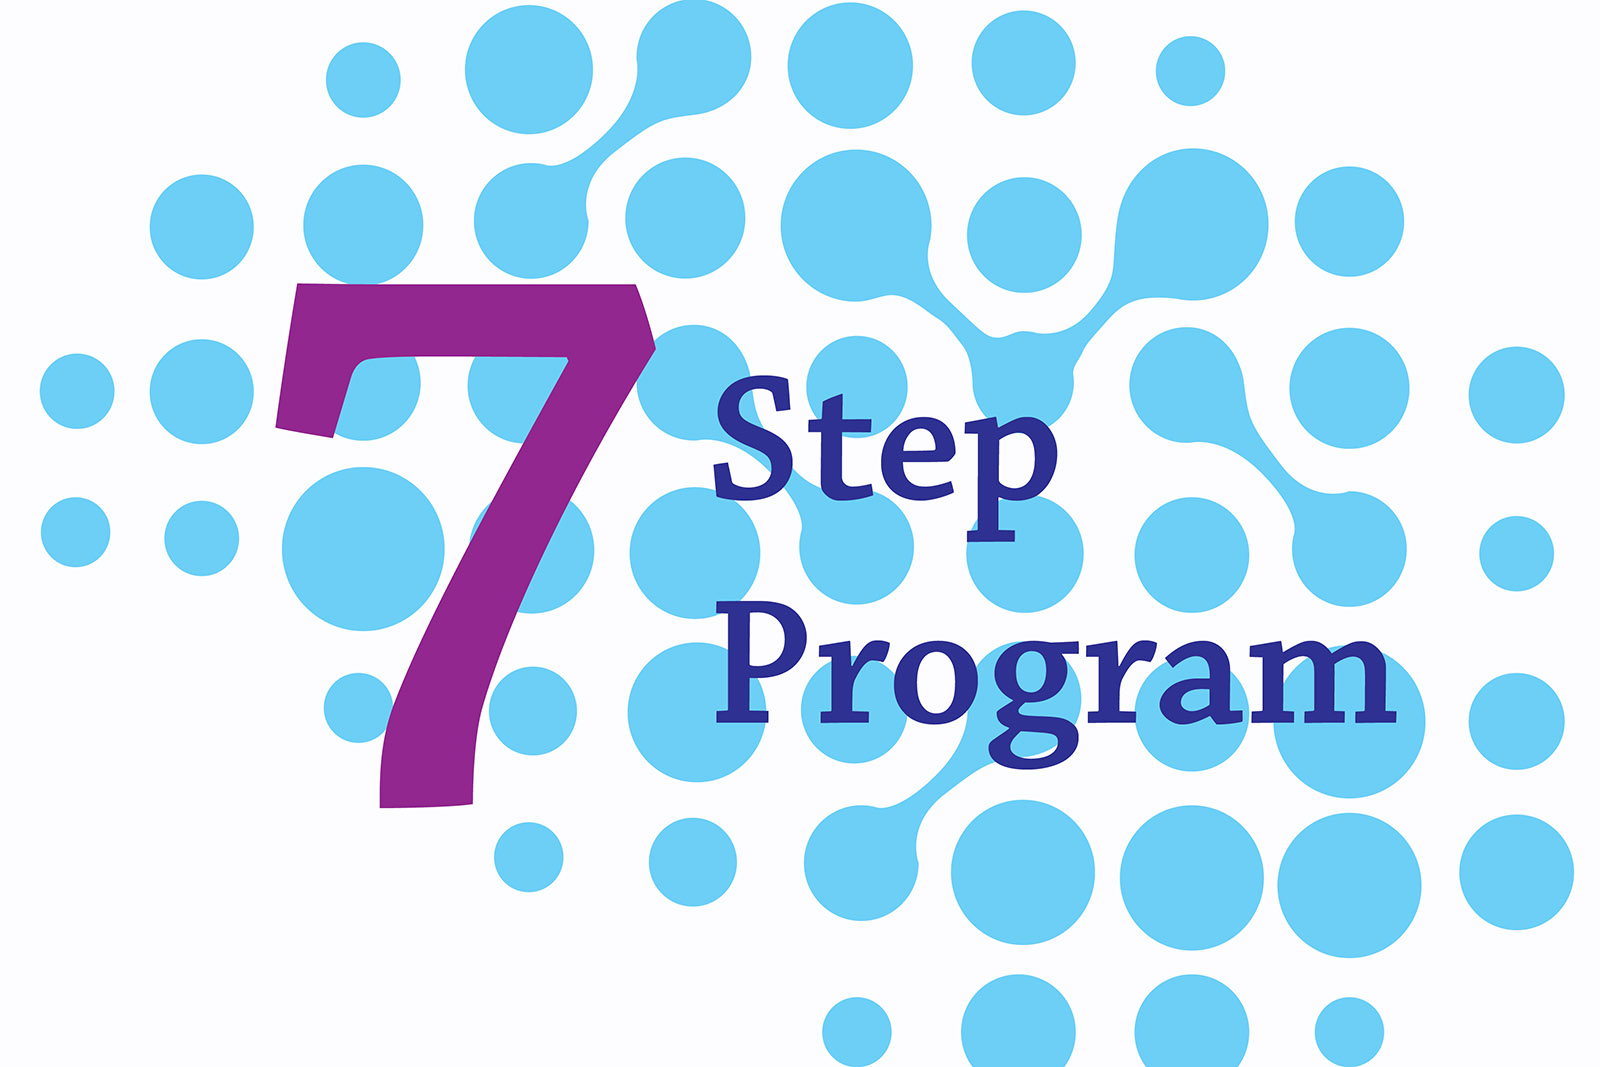 7 Step Program